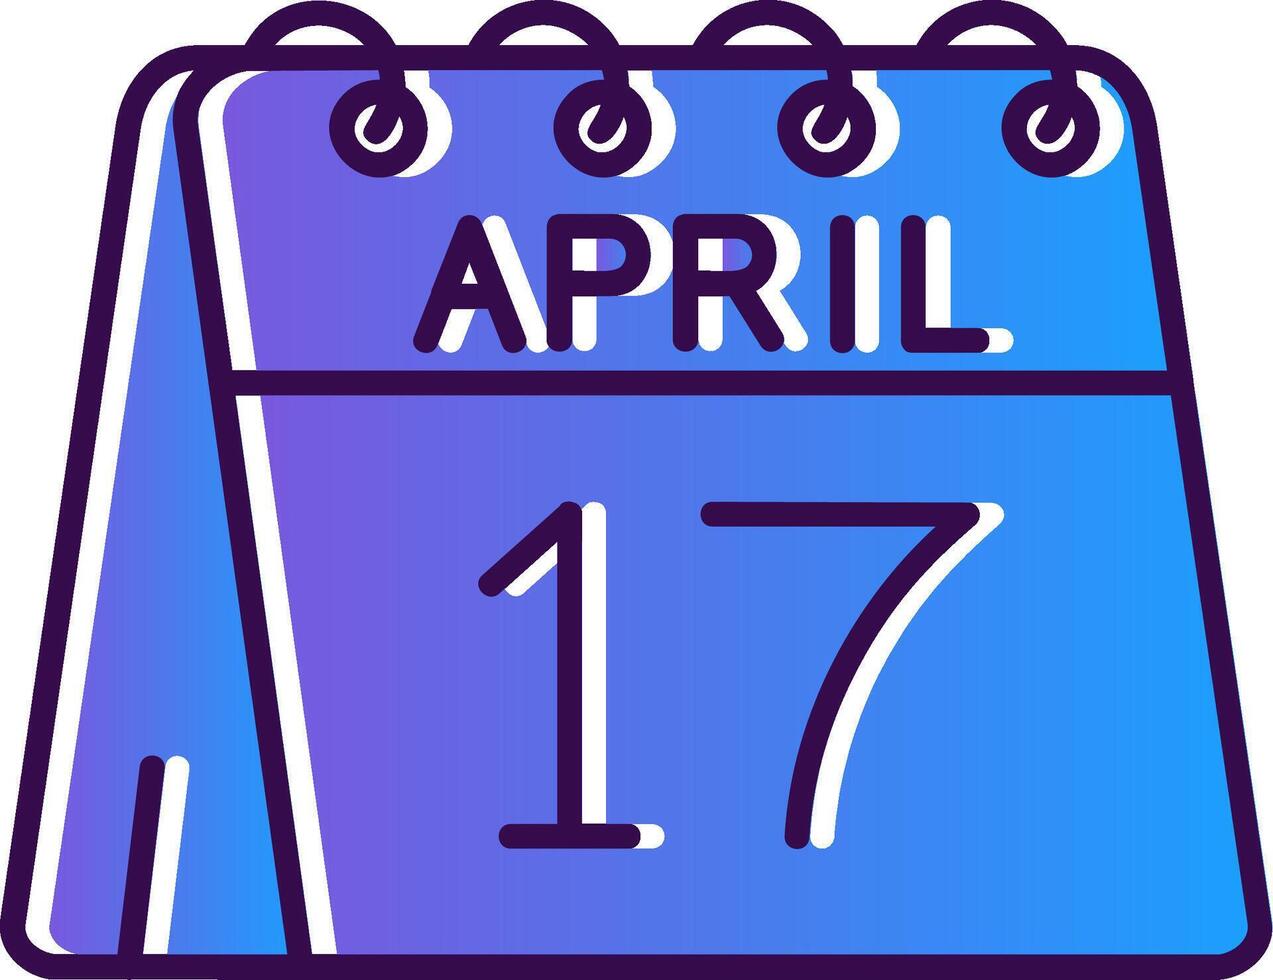 17:e av april lutning fylld ikon vektor